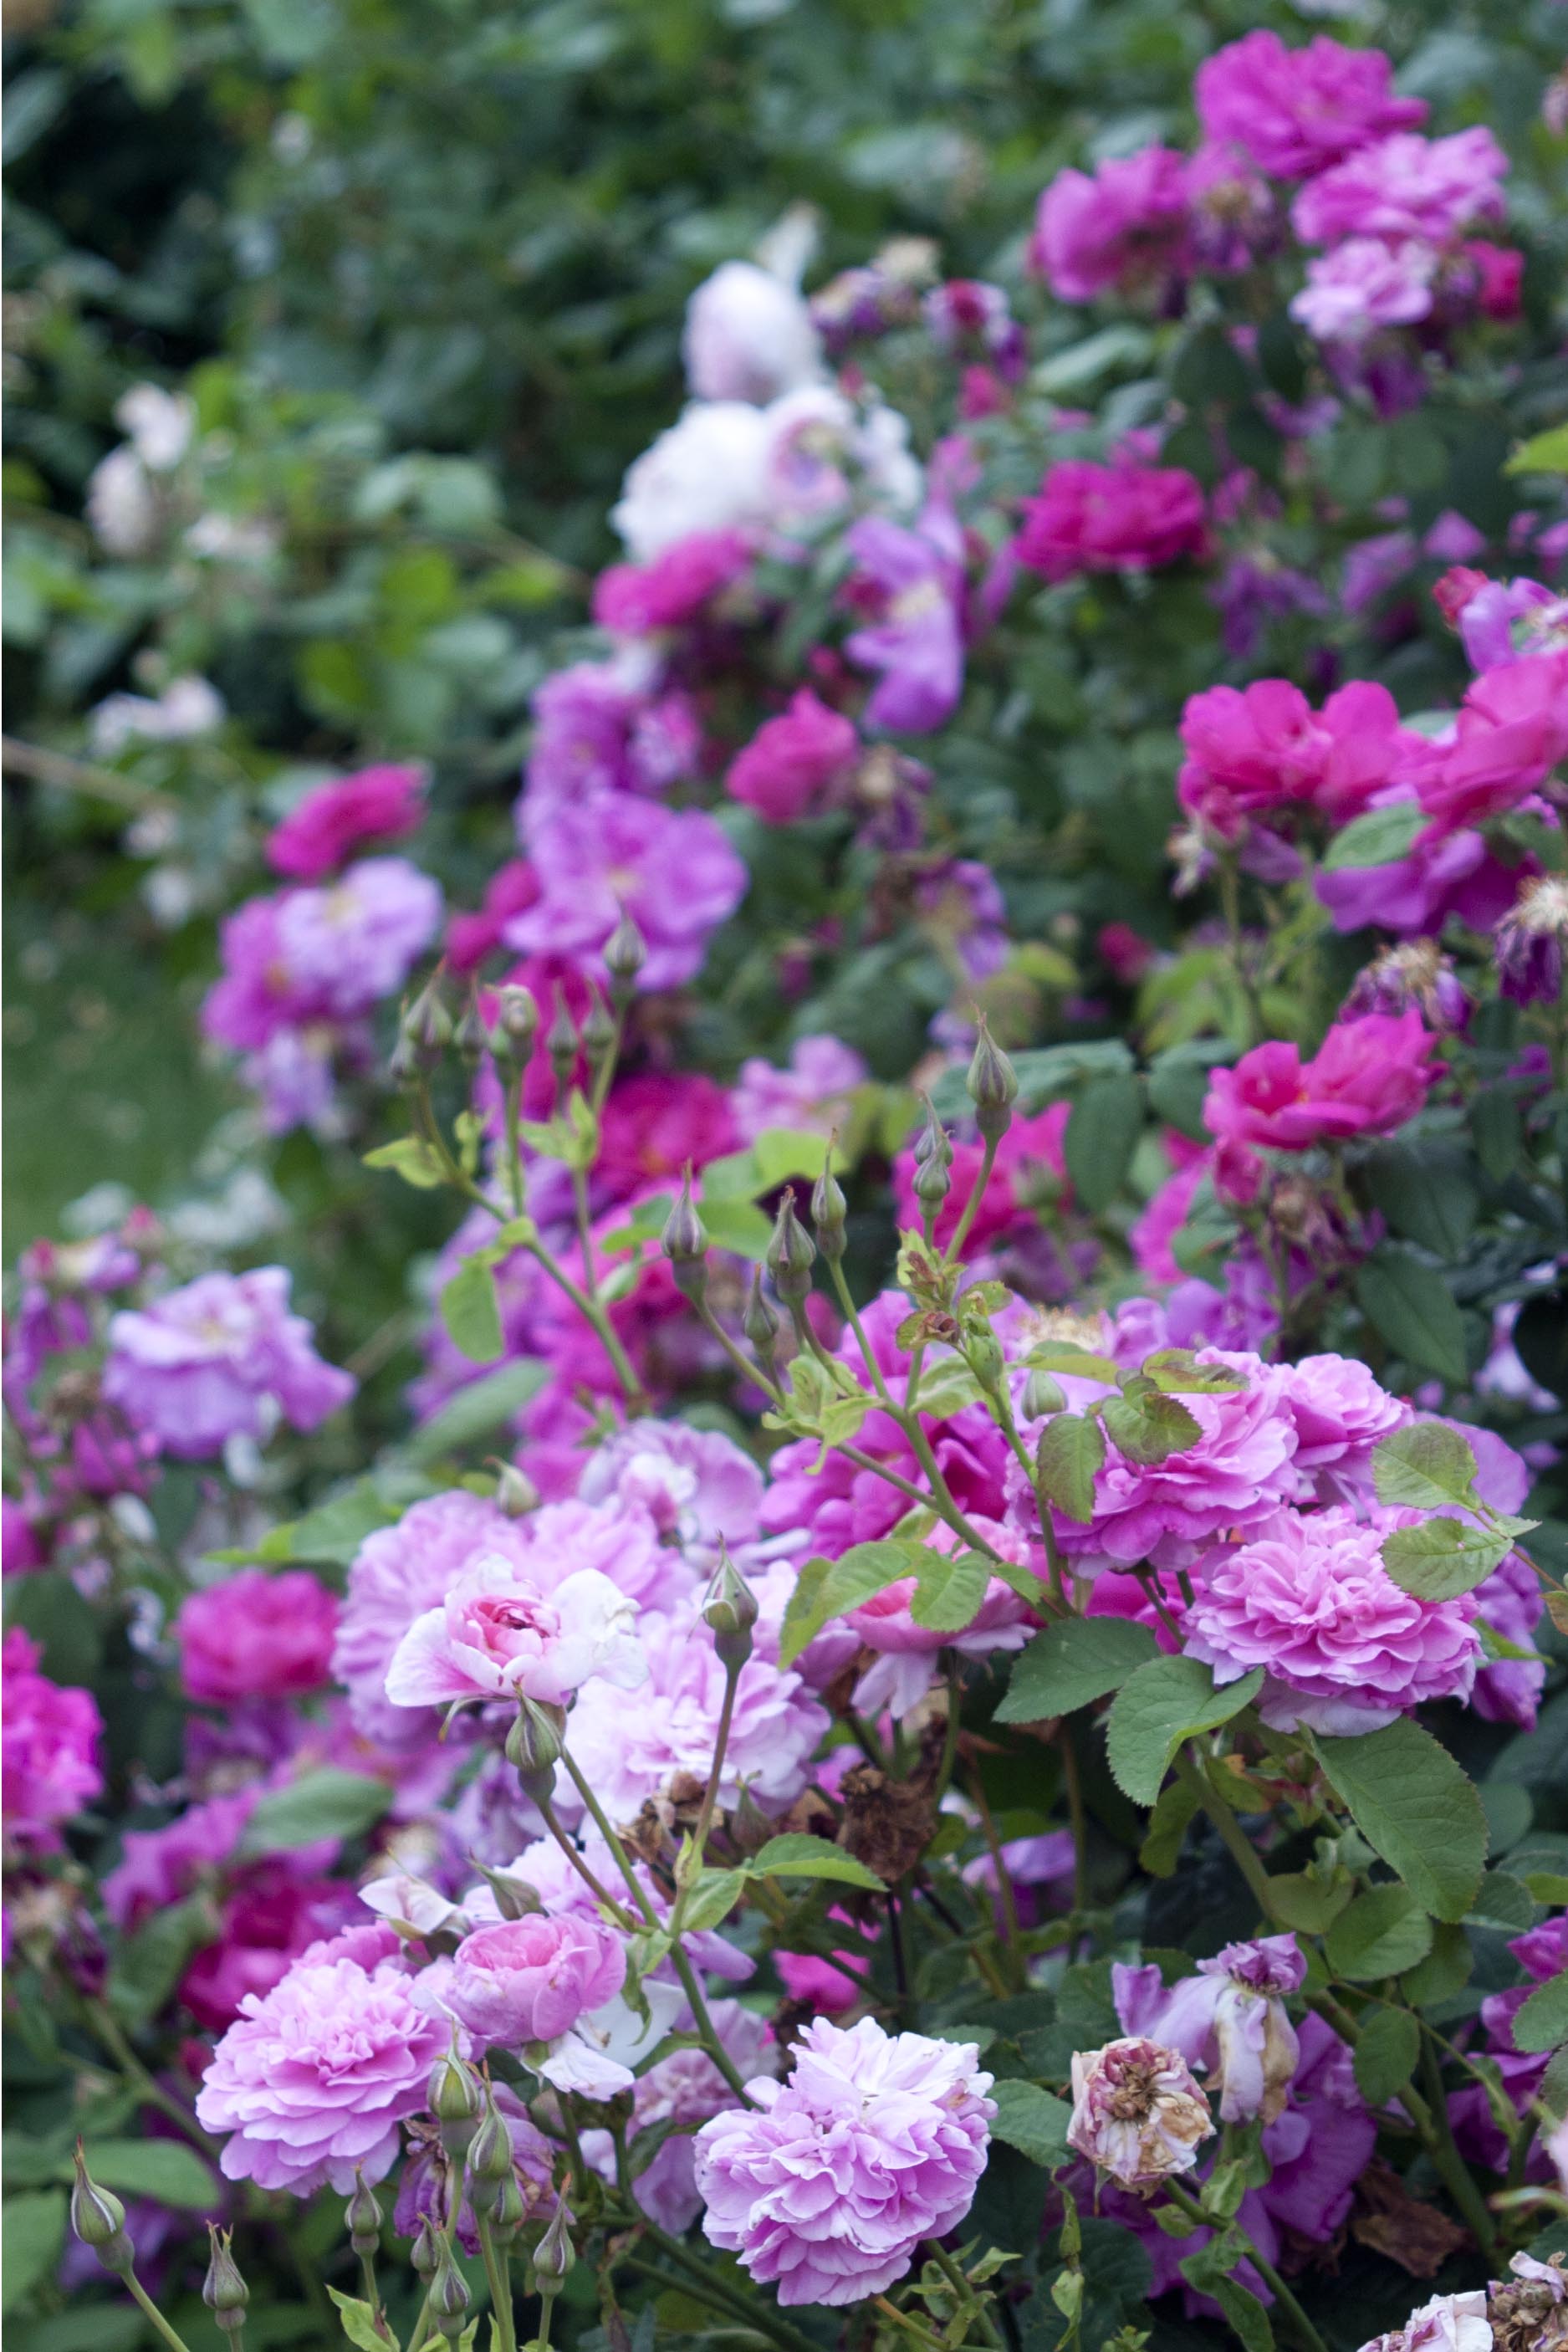 Rose garden, Kew Gardens, London, England. June 2014.